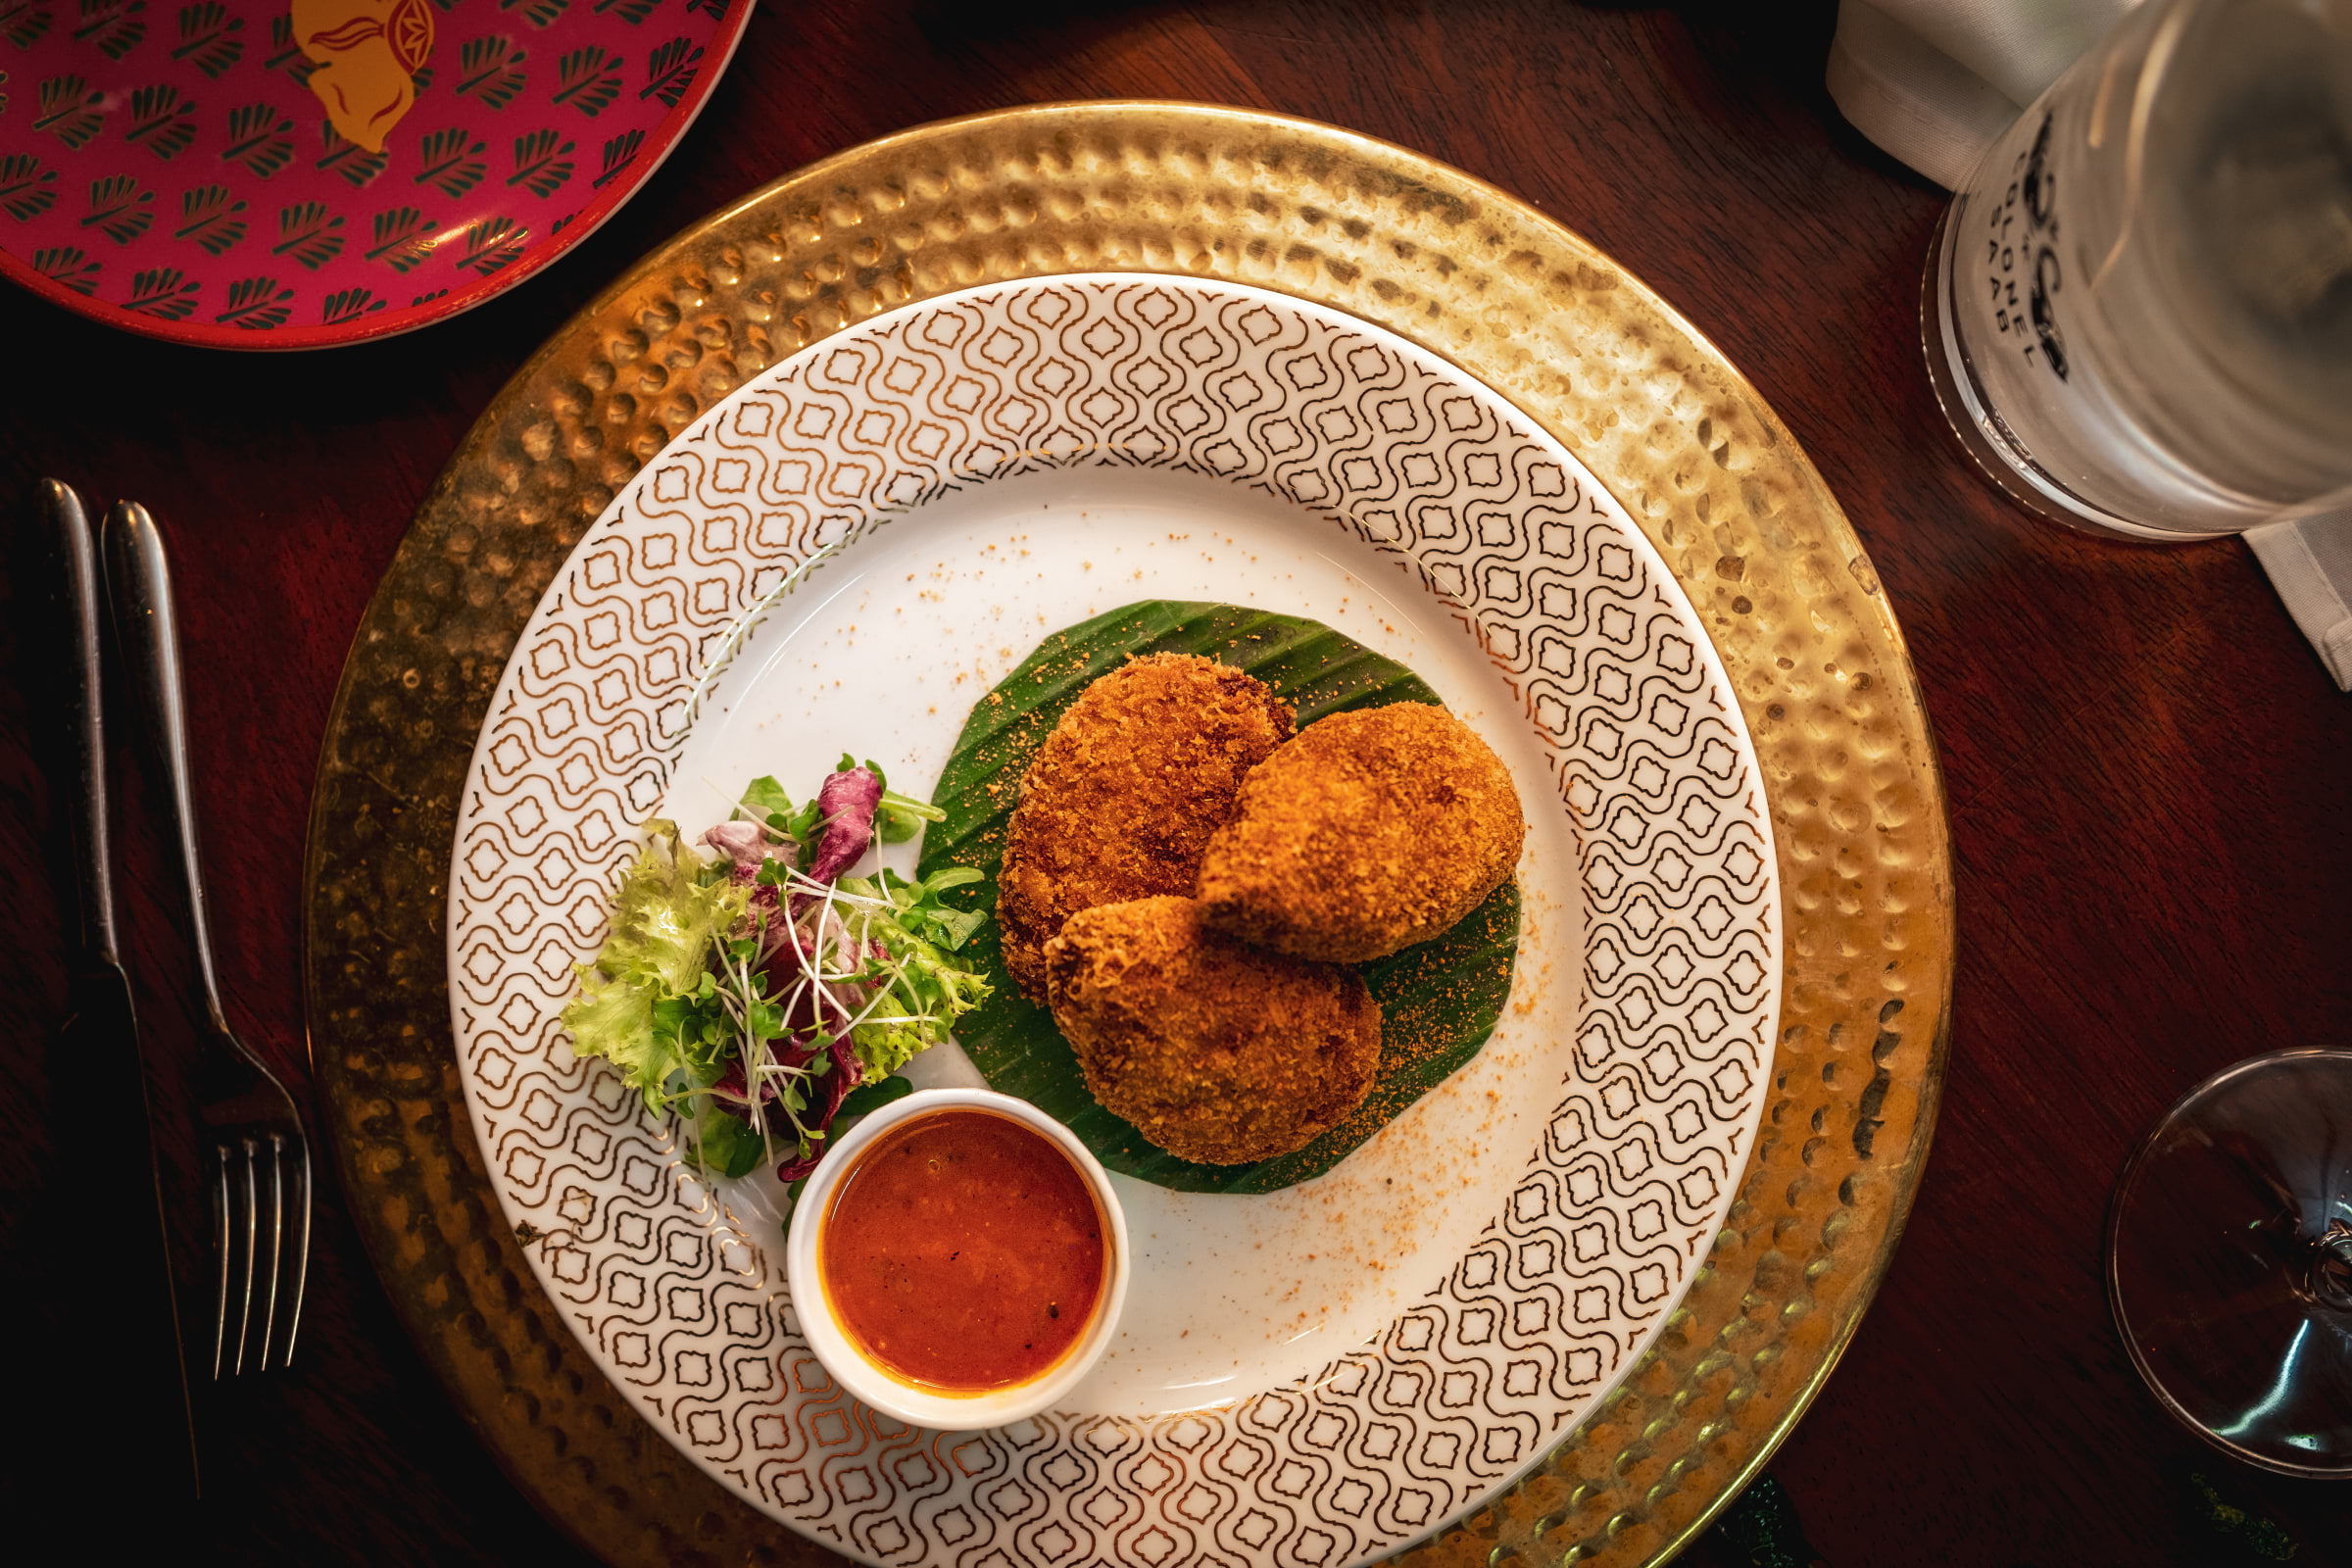 Colonel Saab's bigger restaurant in opens in Trafalgar Square this November